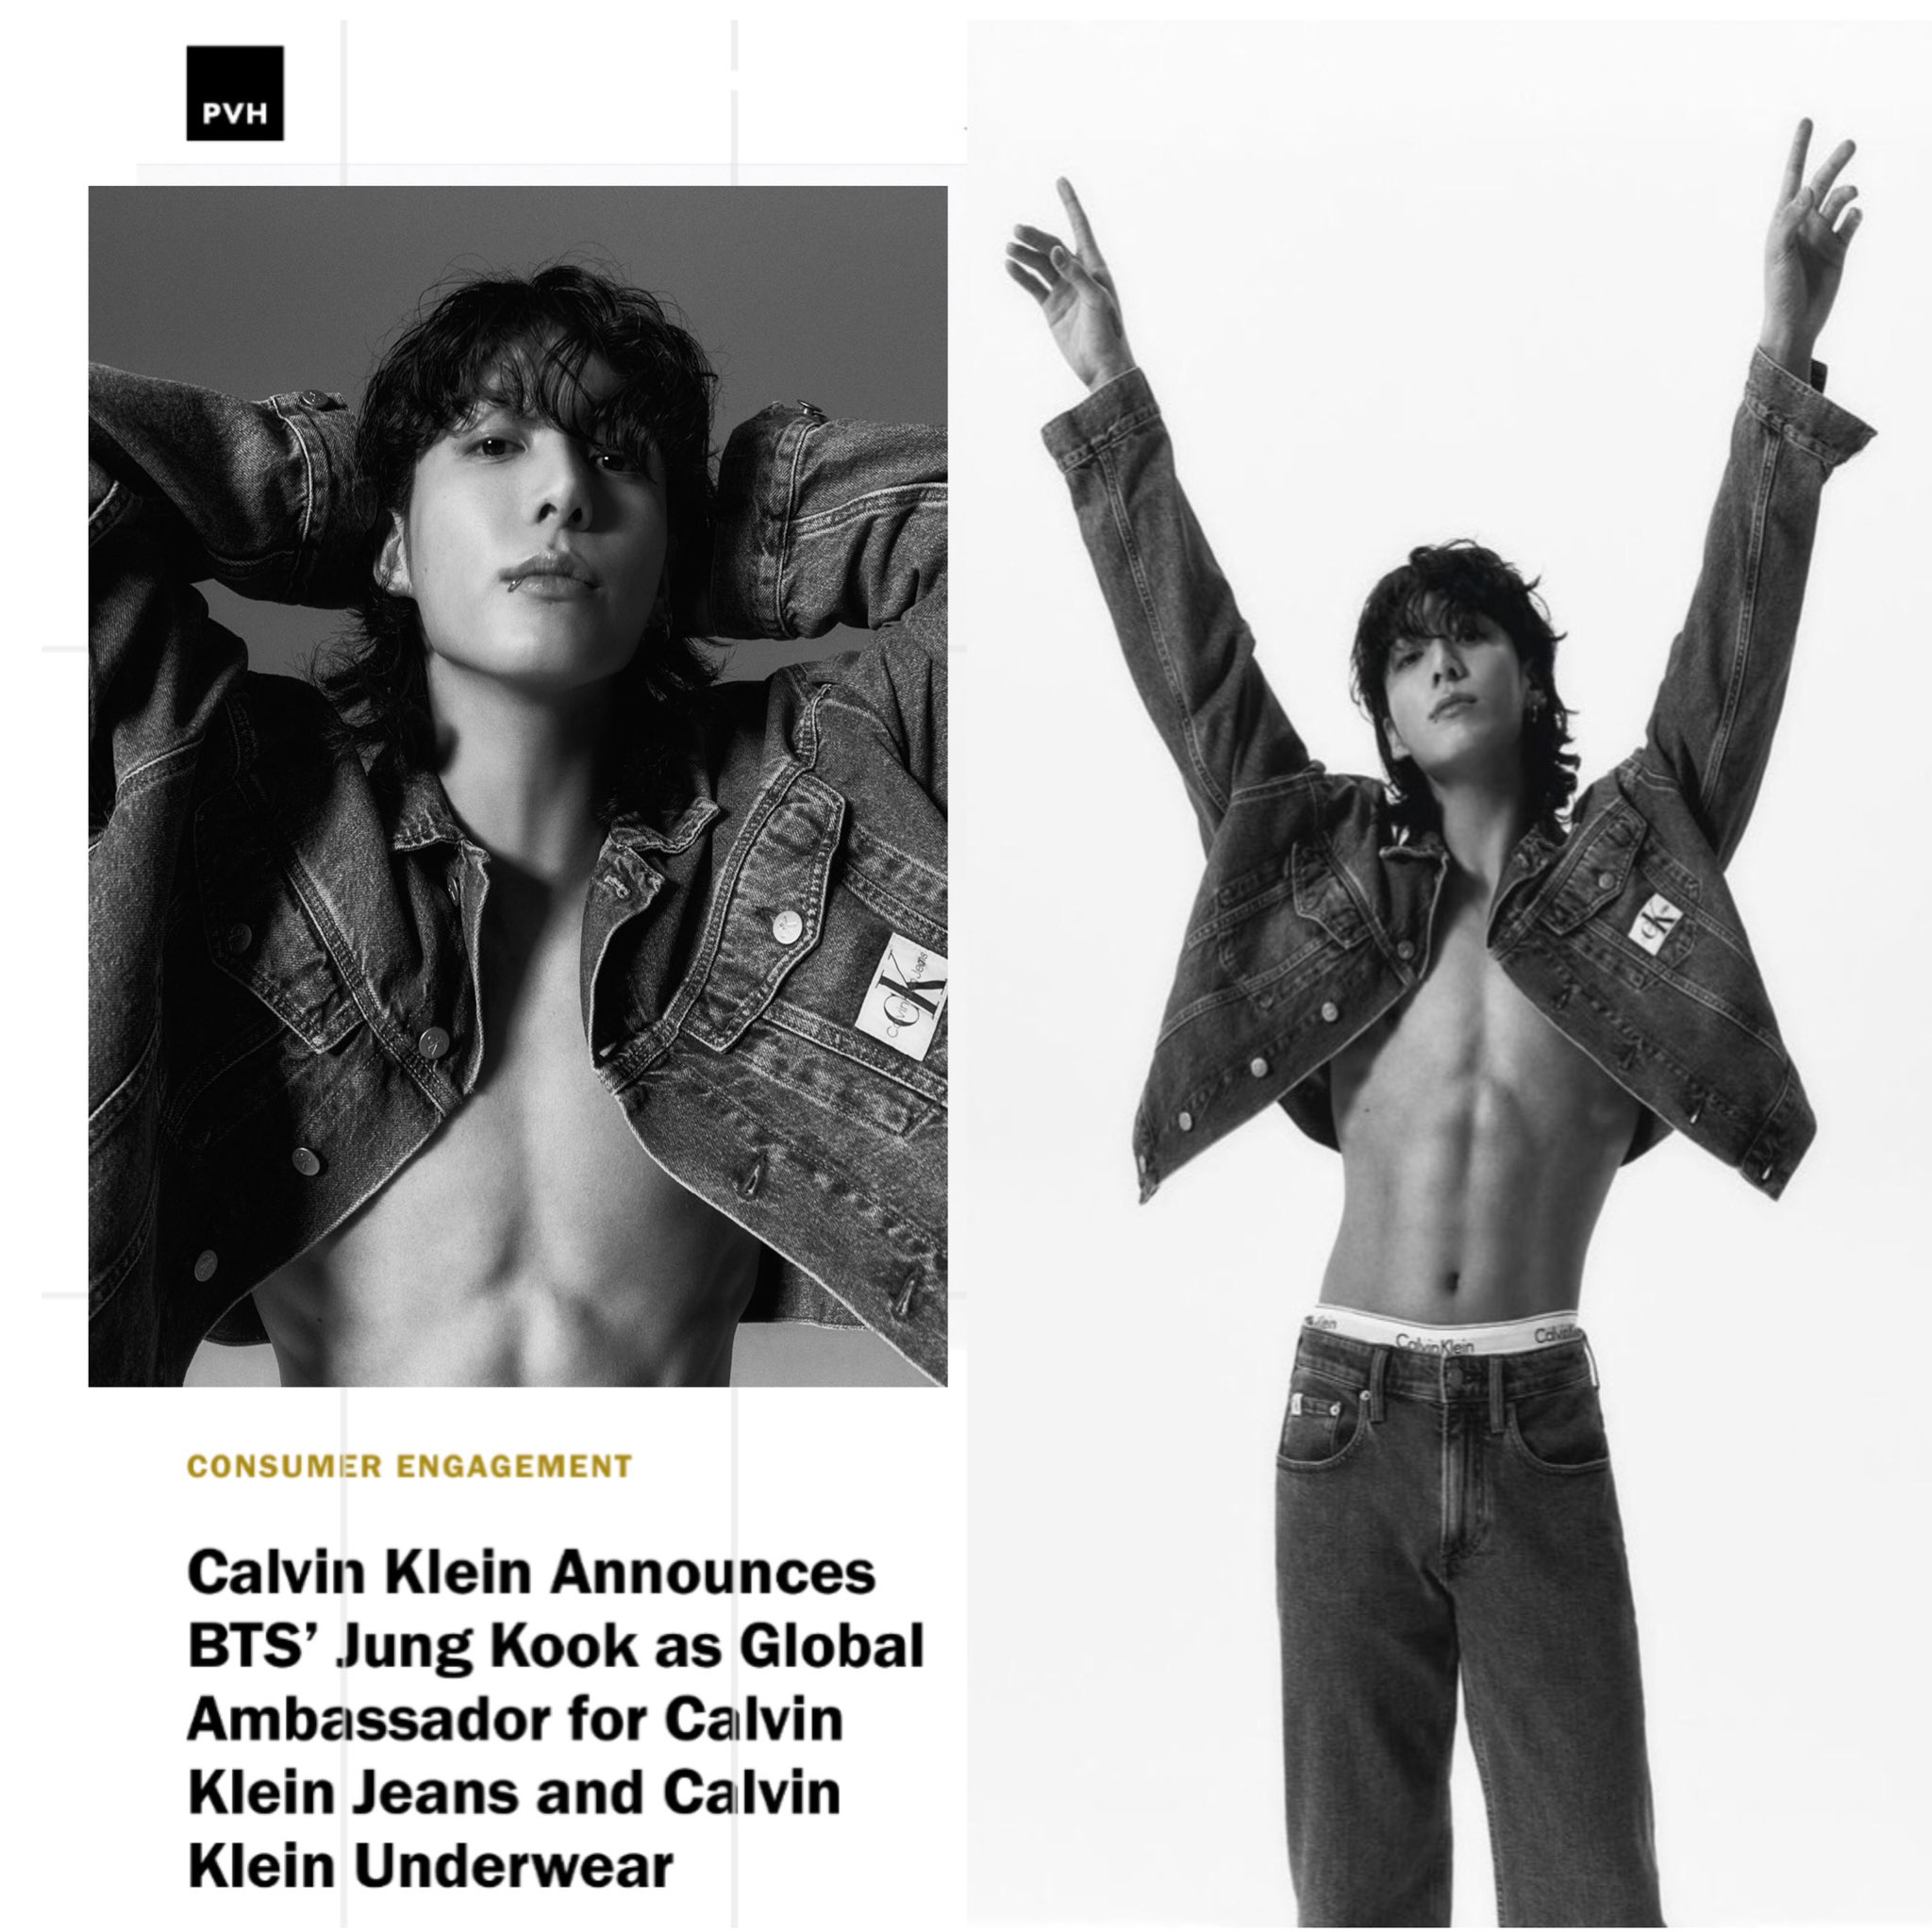 BTS JUNGKOOK as Global Ambassador for CALVIN KLEIN Jeans and Underwear 